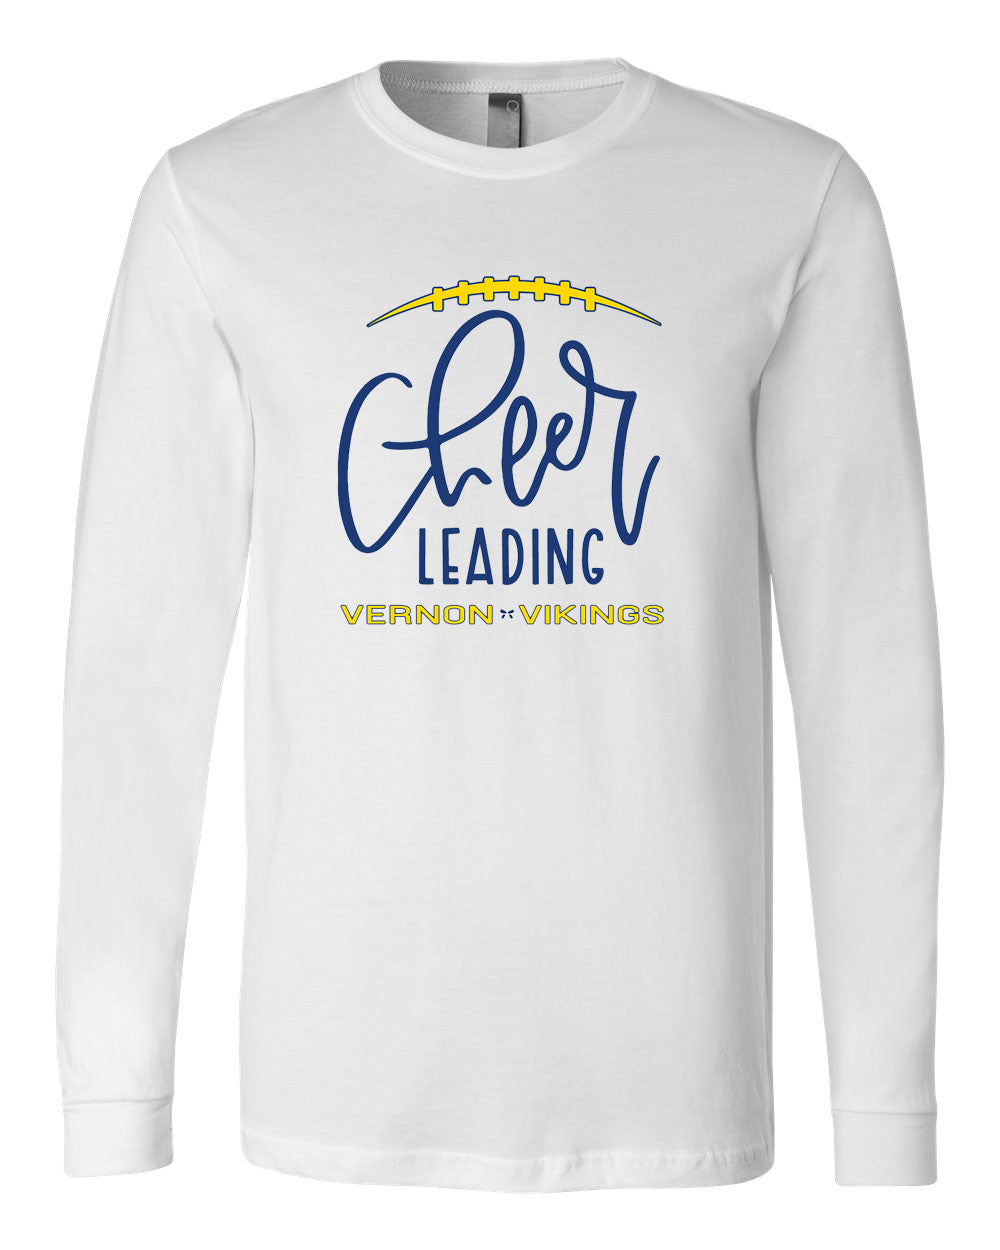 Vikings Cheer Design 5 Long Sleeve Shirt